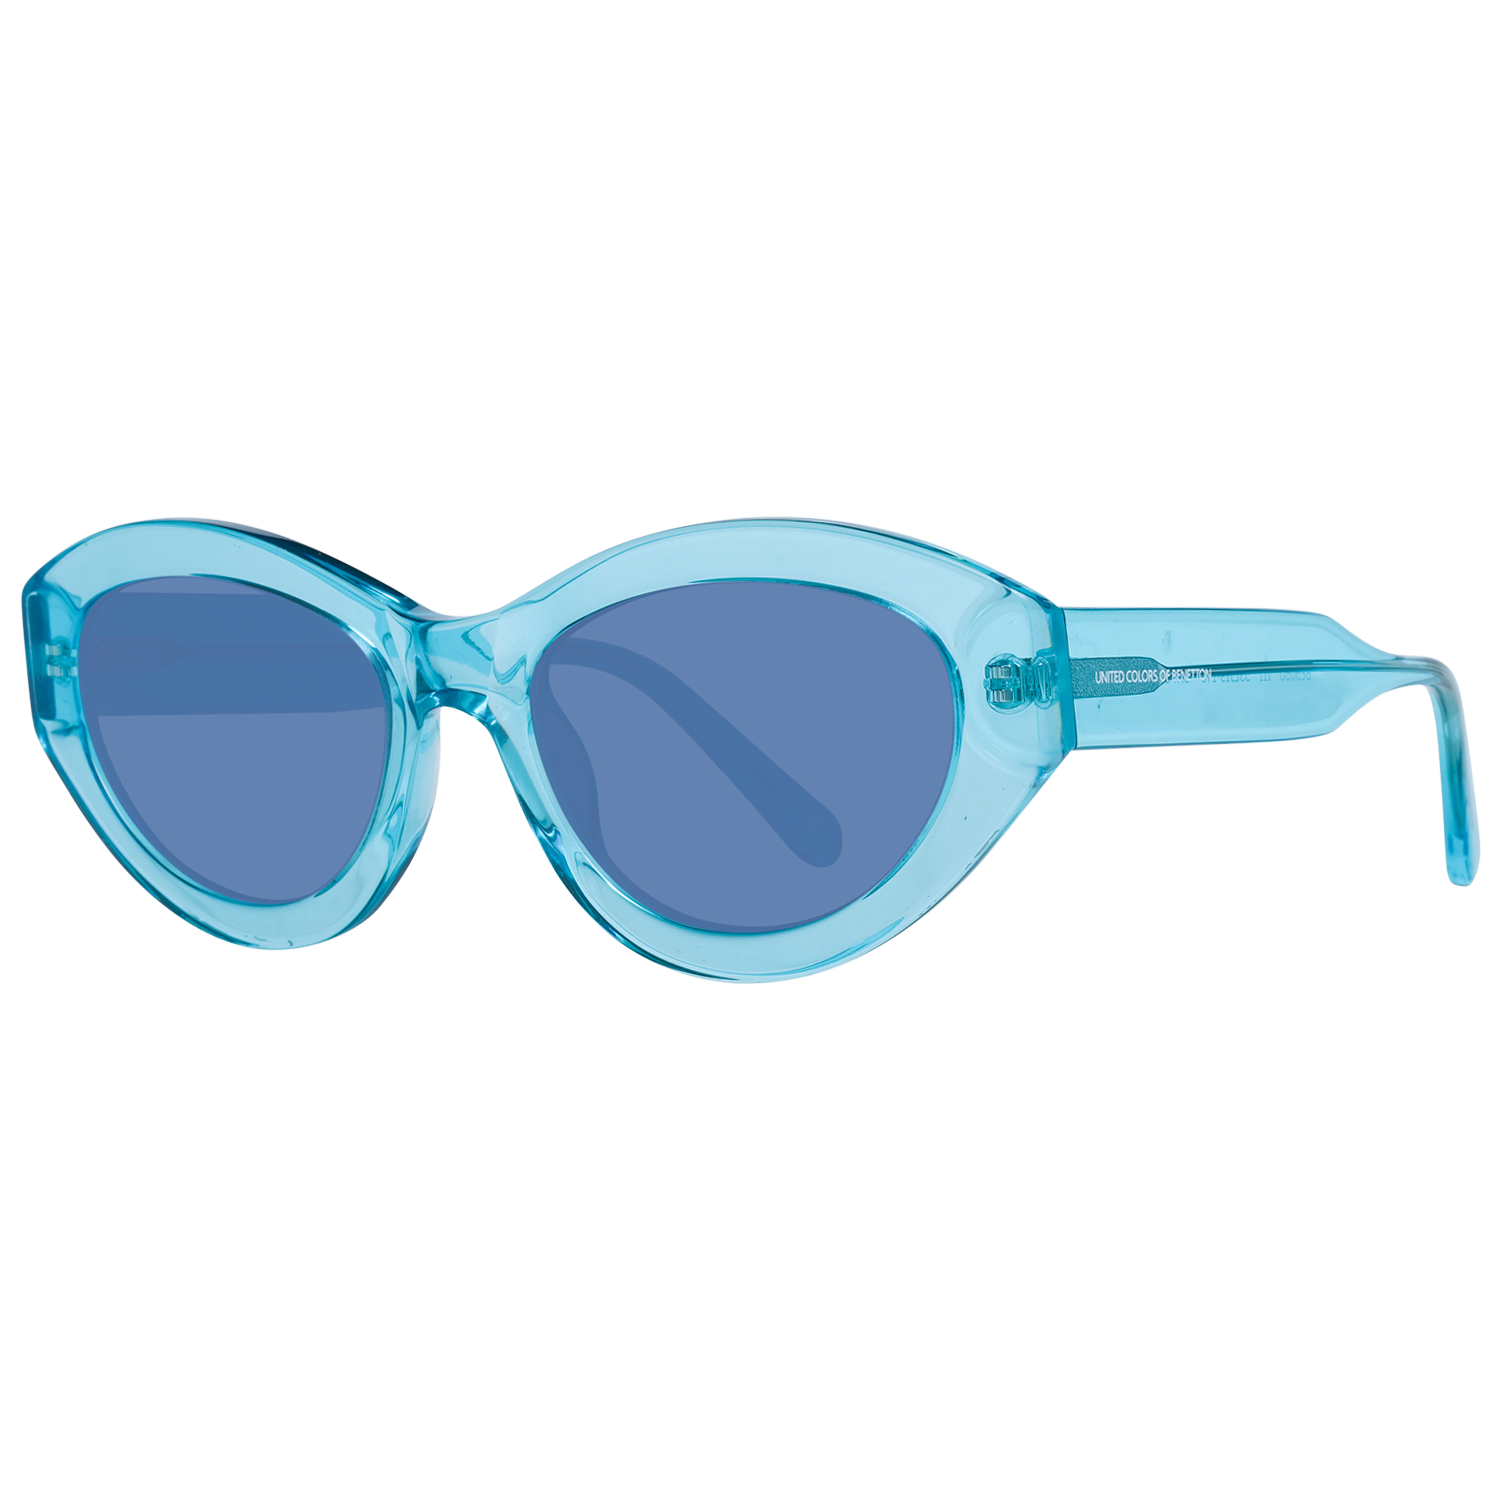 Benetton Sunglasses Benetton Sunglasses BE5050 111 53 Eyeglasses Eyewear UK USA Australia 